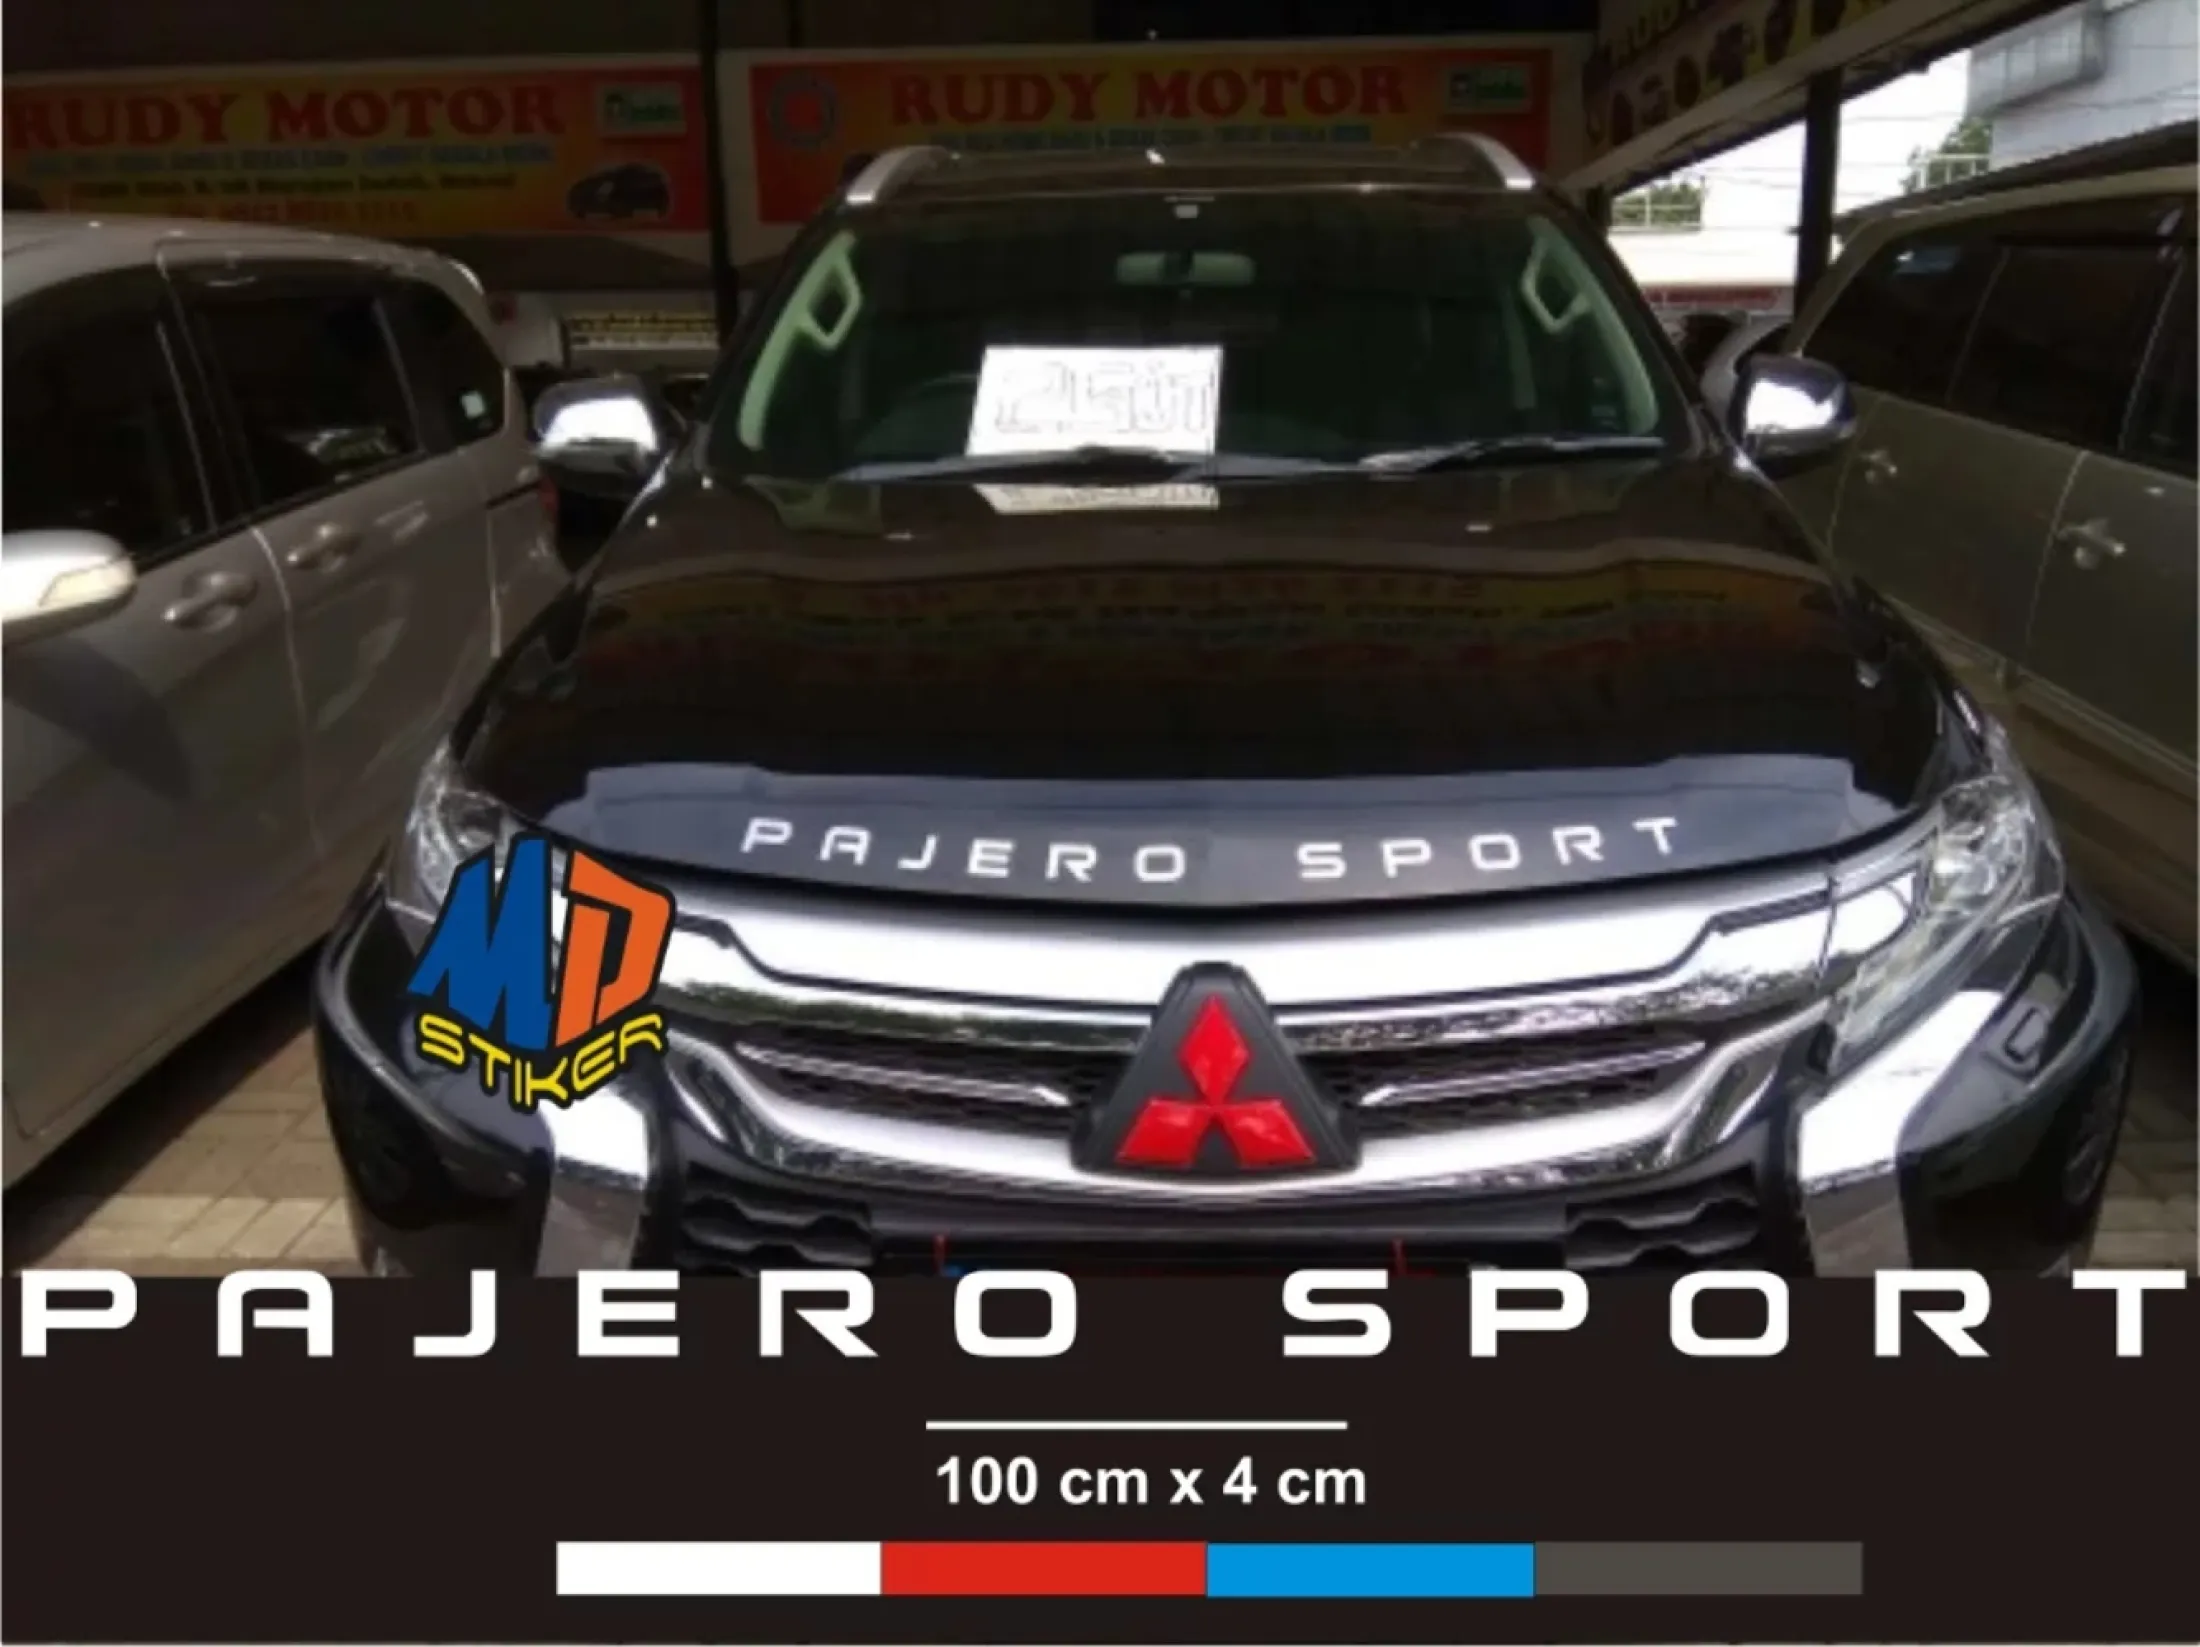 Stiker Mobil Pajero Sport Depan Membeli Jualan Online Stiker Bumper